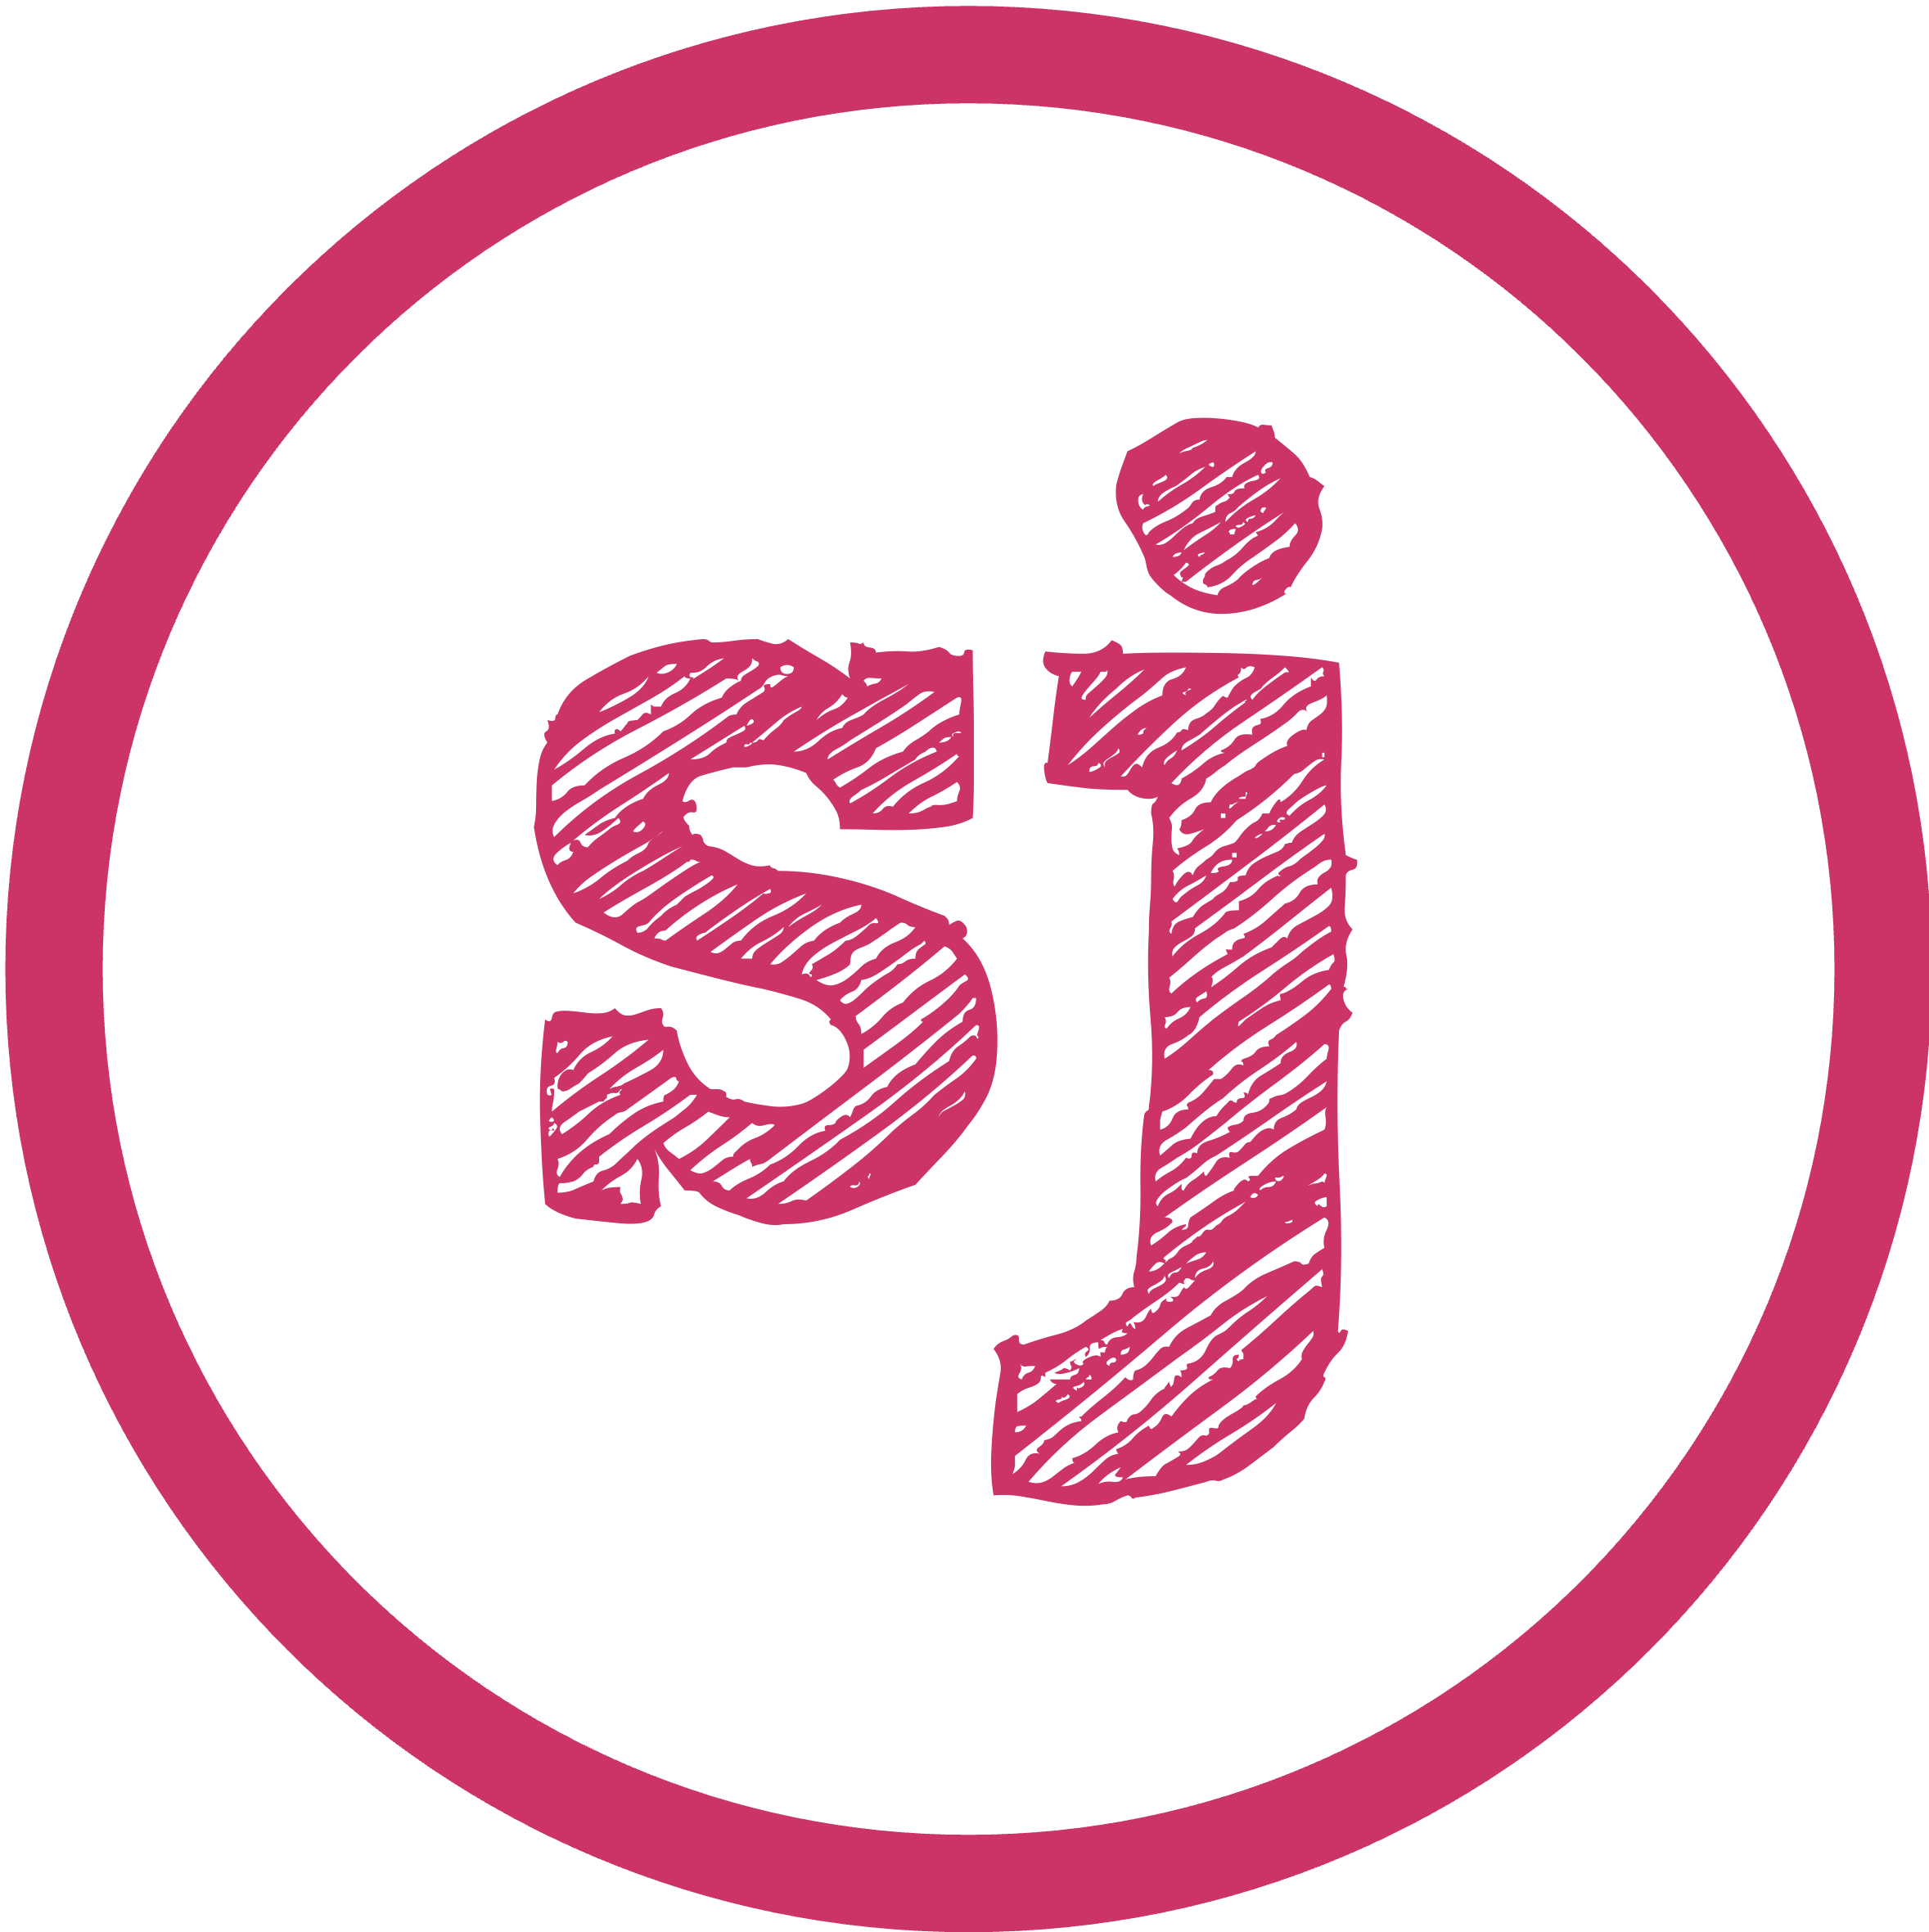 Bright pink circle around bright pink lower case initials SJ